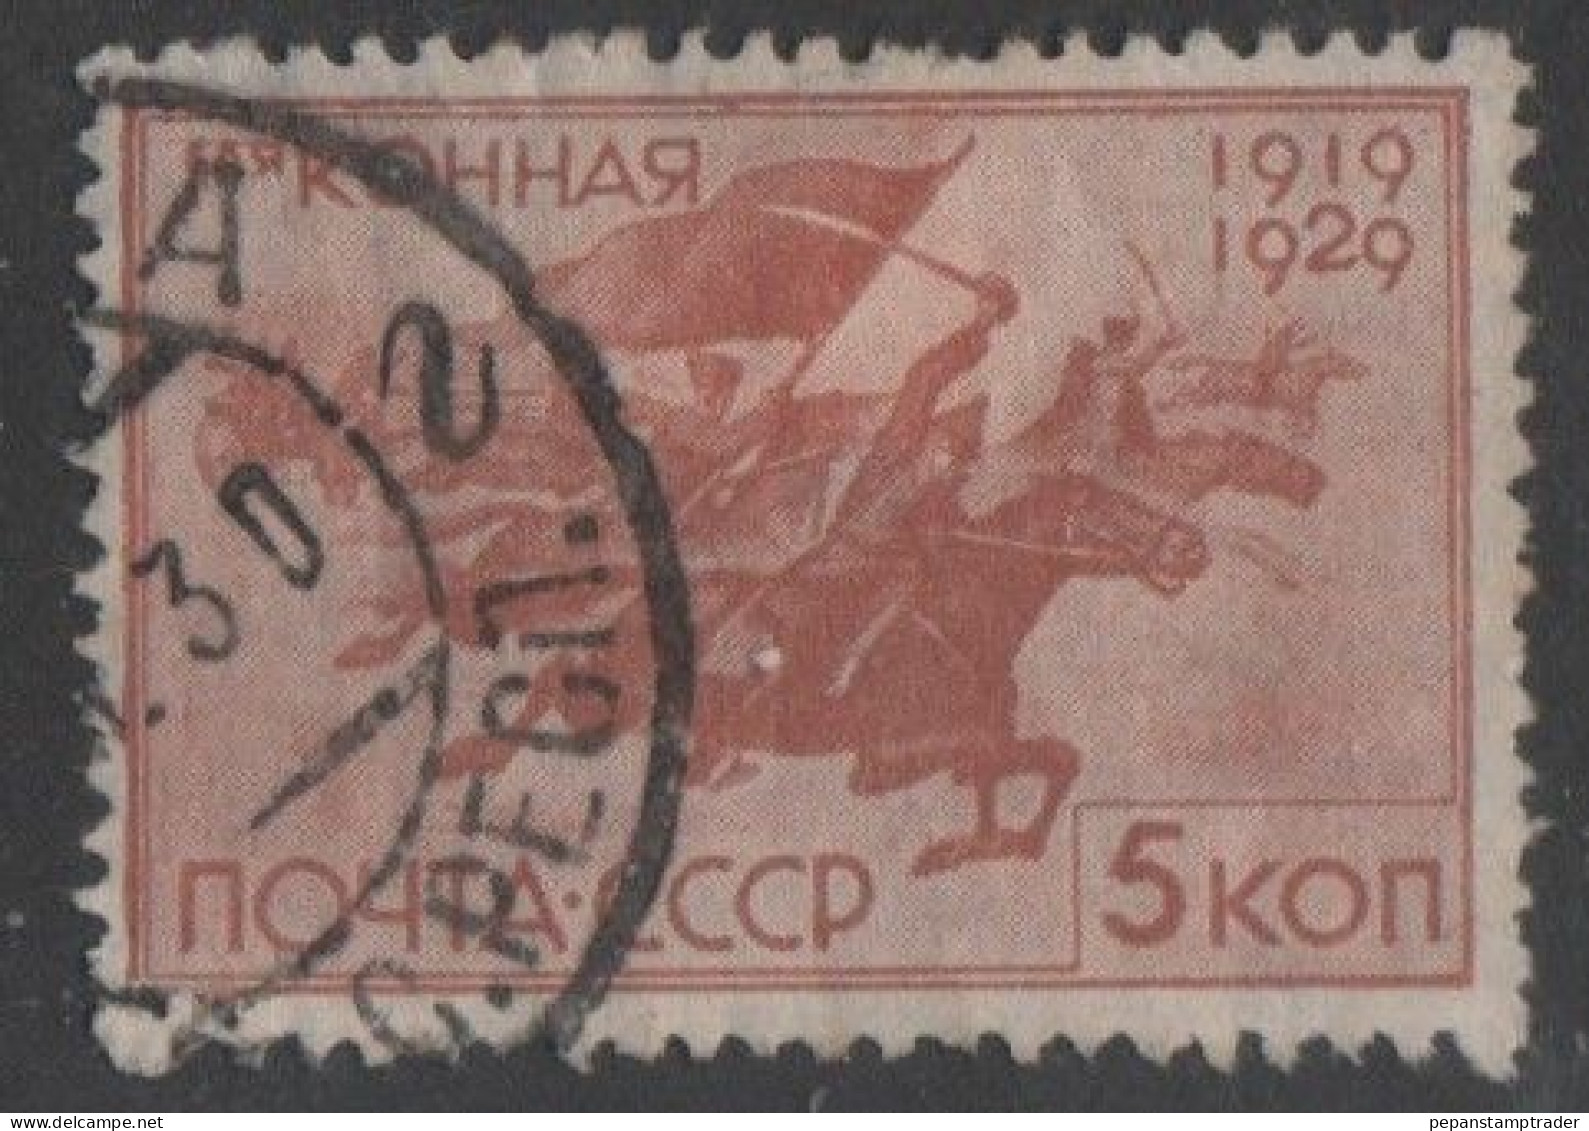 USSR - #432 -used - Gebraucht